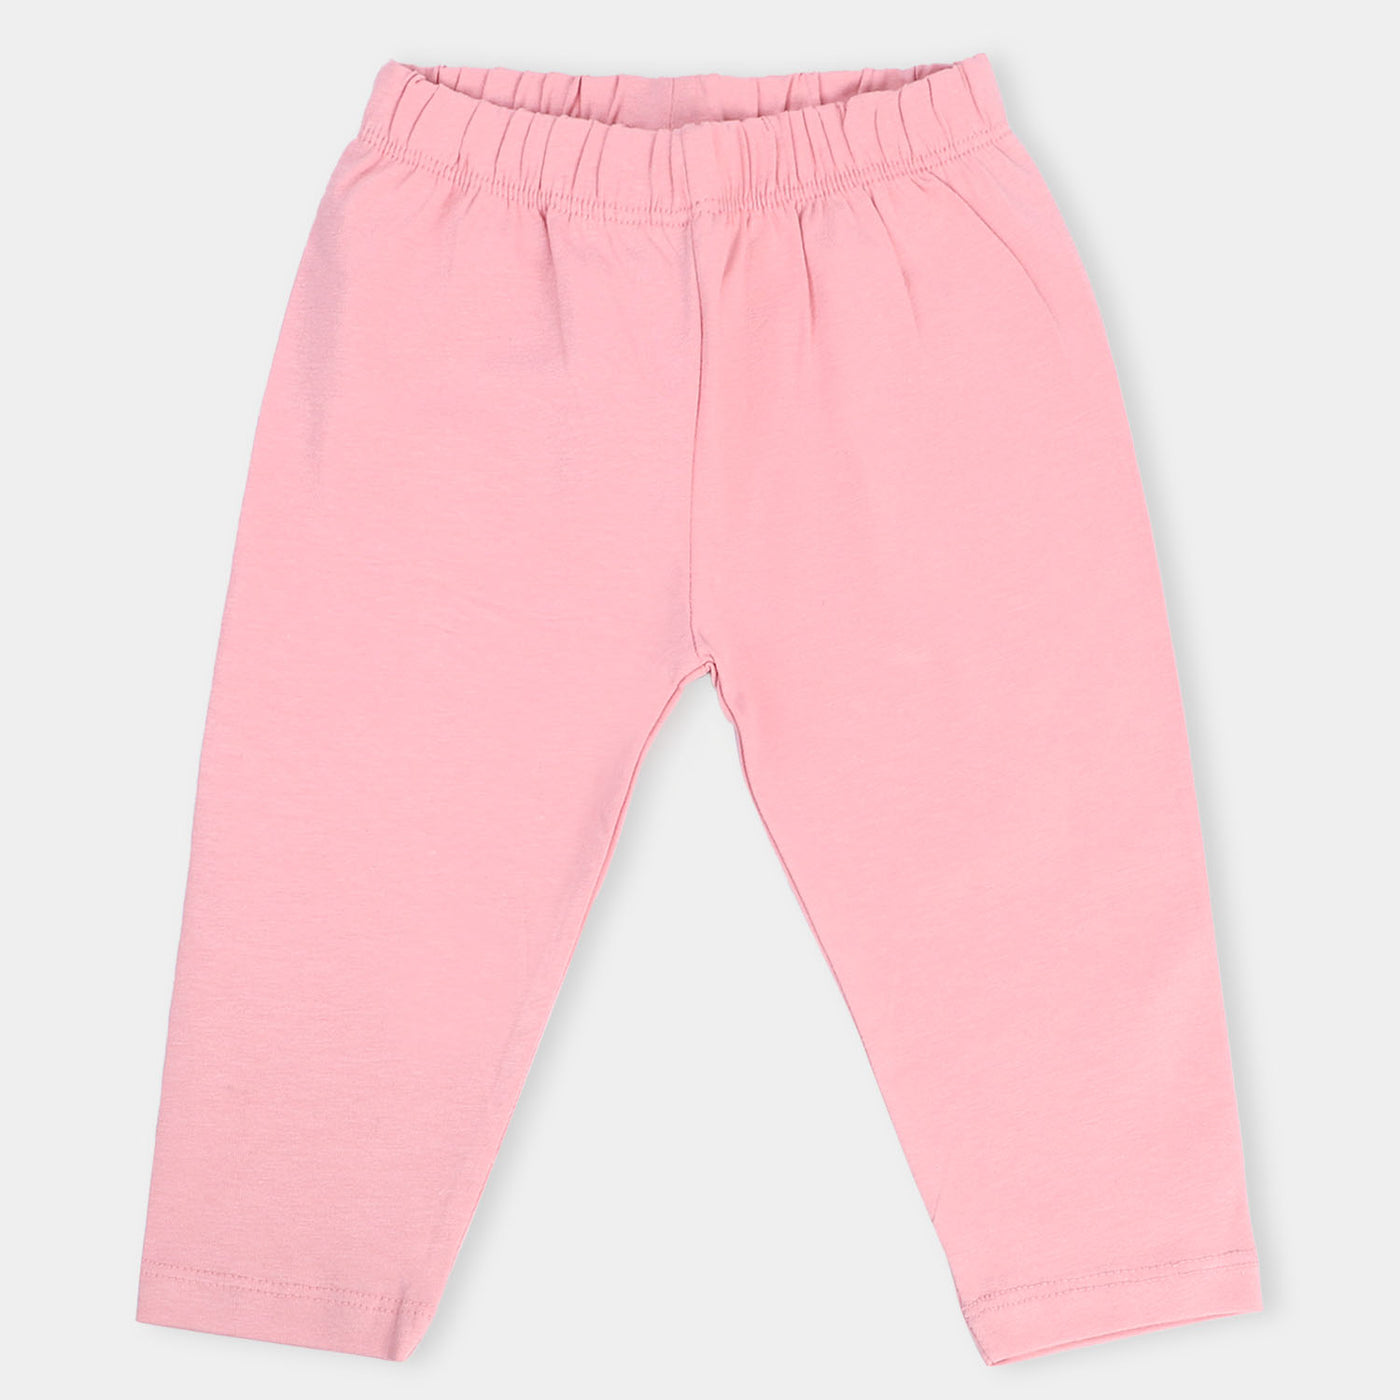 Infant Girls Lycra Jersey Plain Tights-Candy Pink